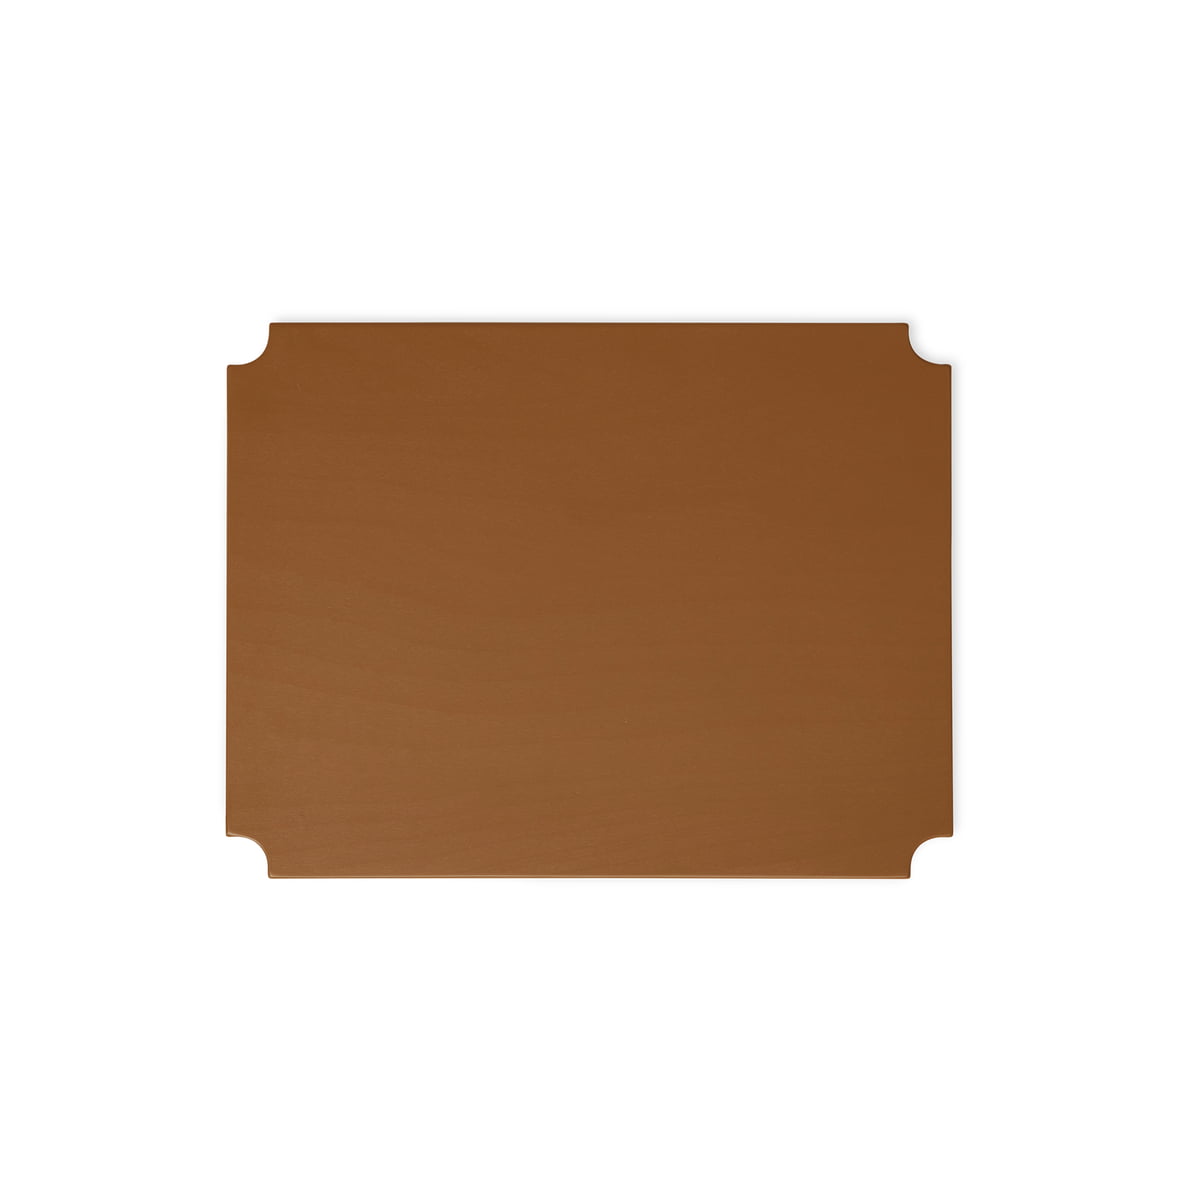 form & refine - pillar storage box couvercle m, clay brown